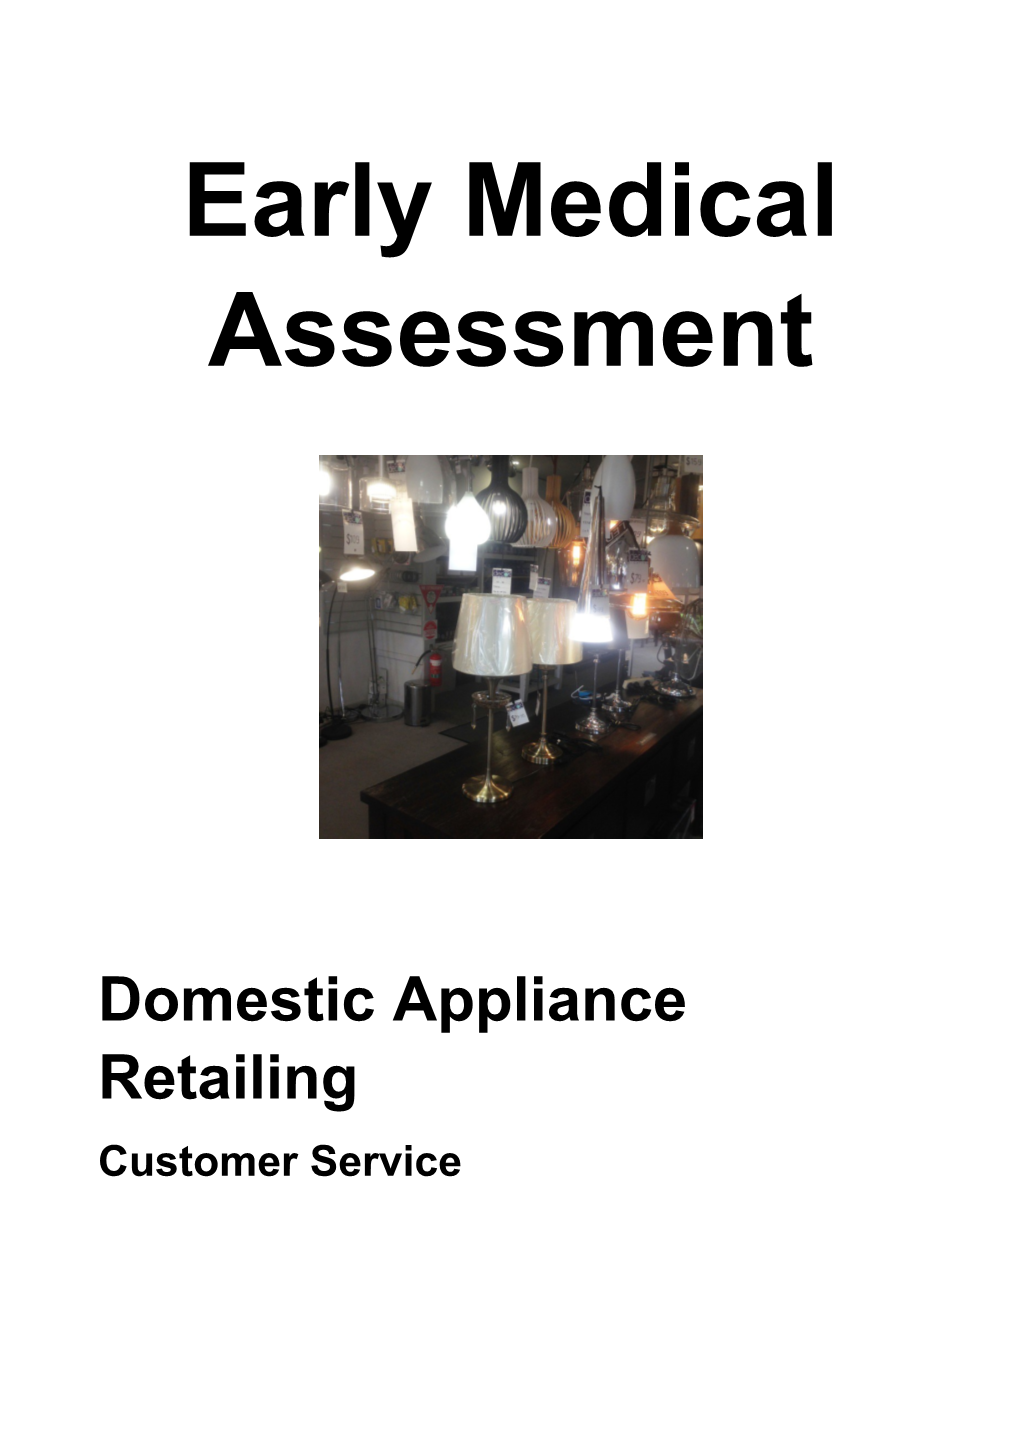 Domestic Appliance Retailing - Customer Service - Lighting